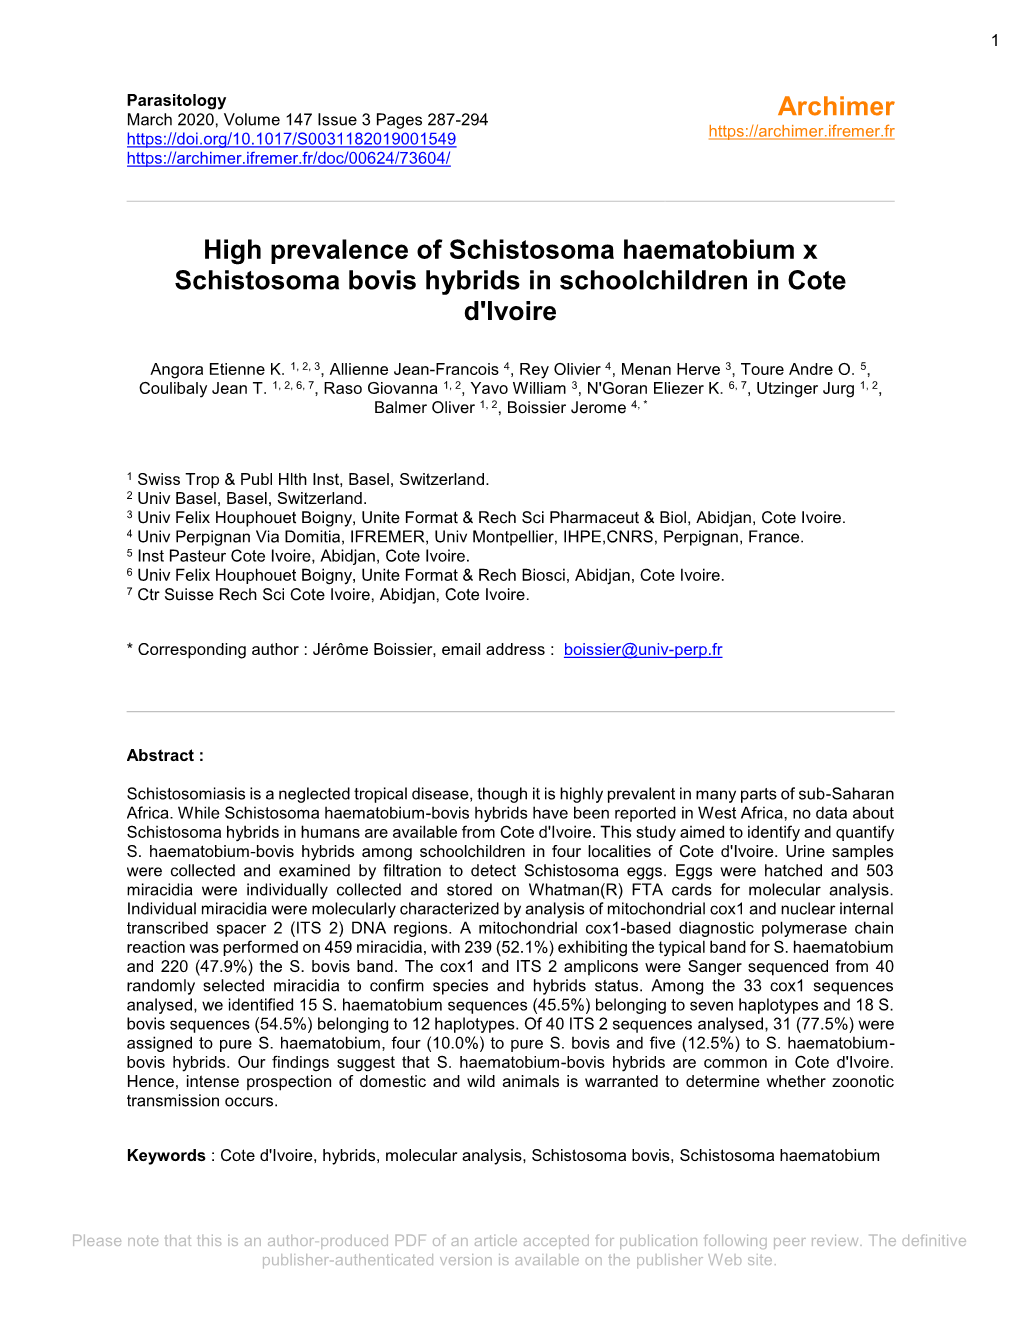 High Prevalence of Schistosoma Haematobium X Schistosoma Bovis Hybrids in Schoolchildren in Cote D'ivoire